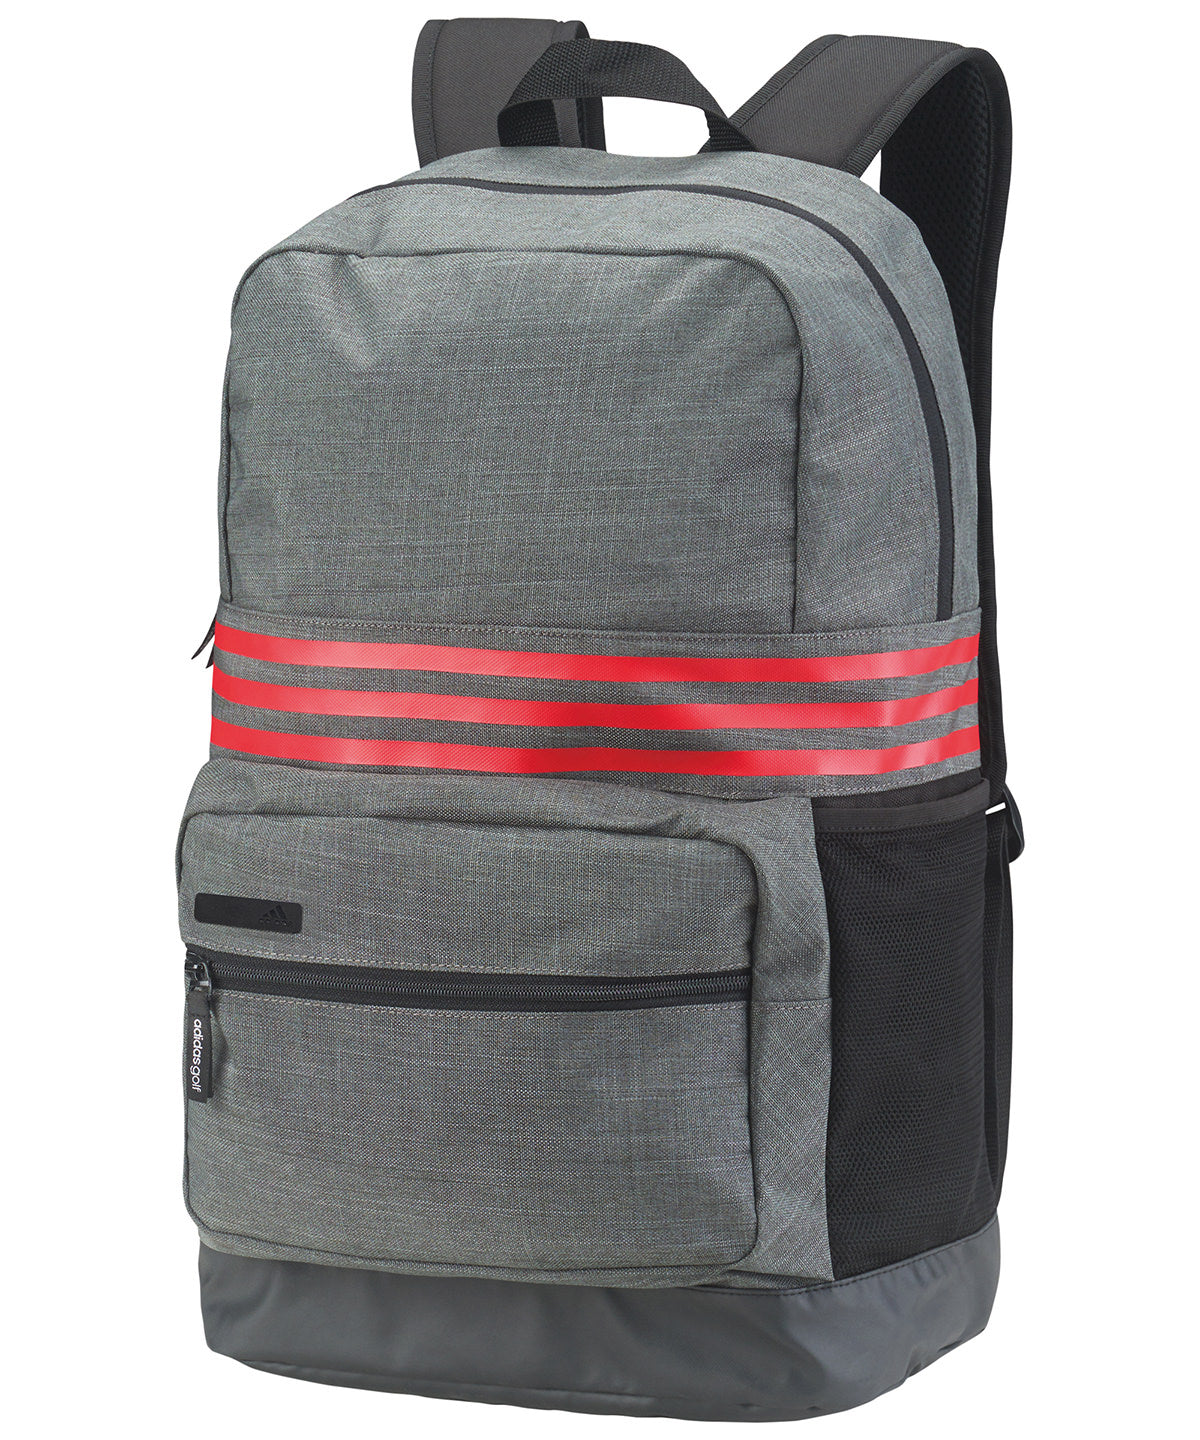 Töskur - 3-Stripes Medium Backpack